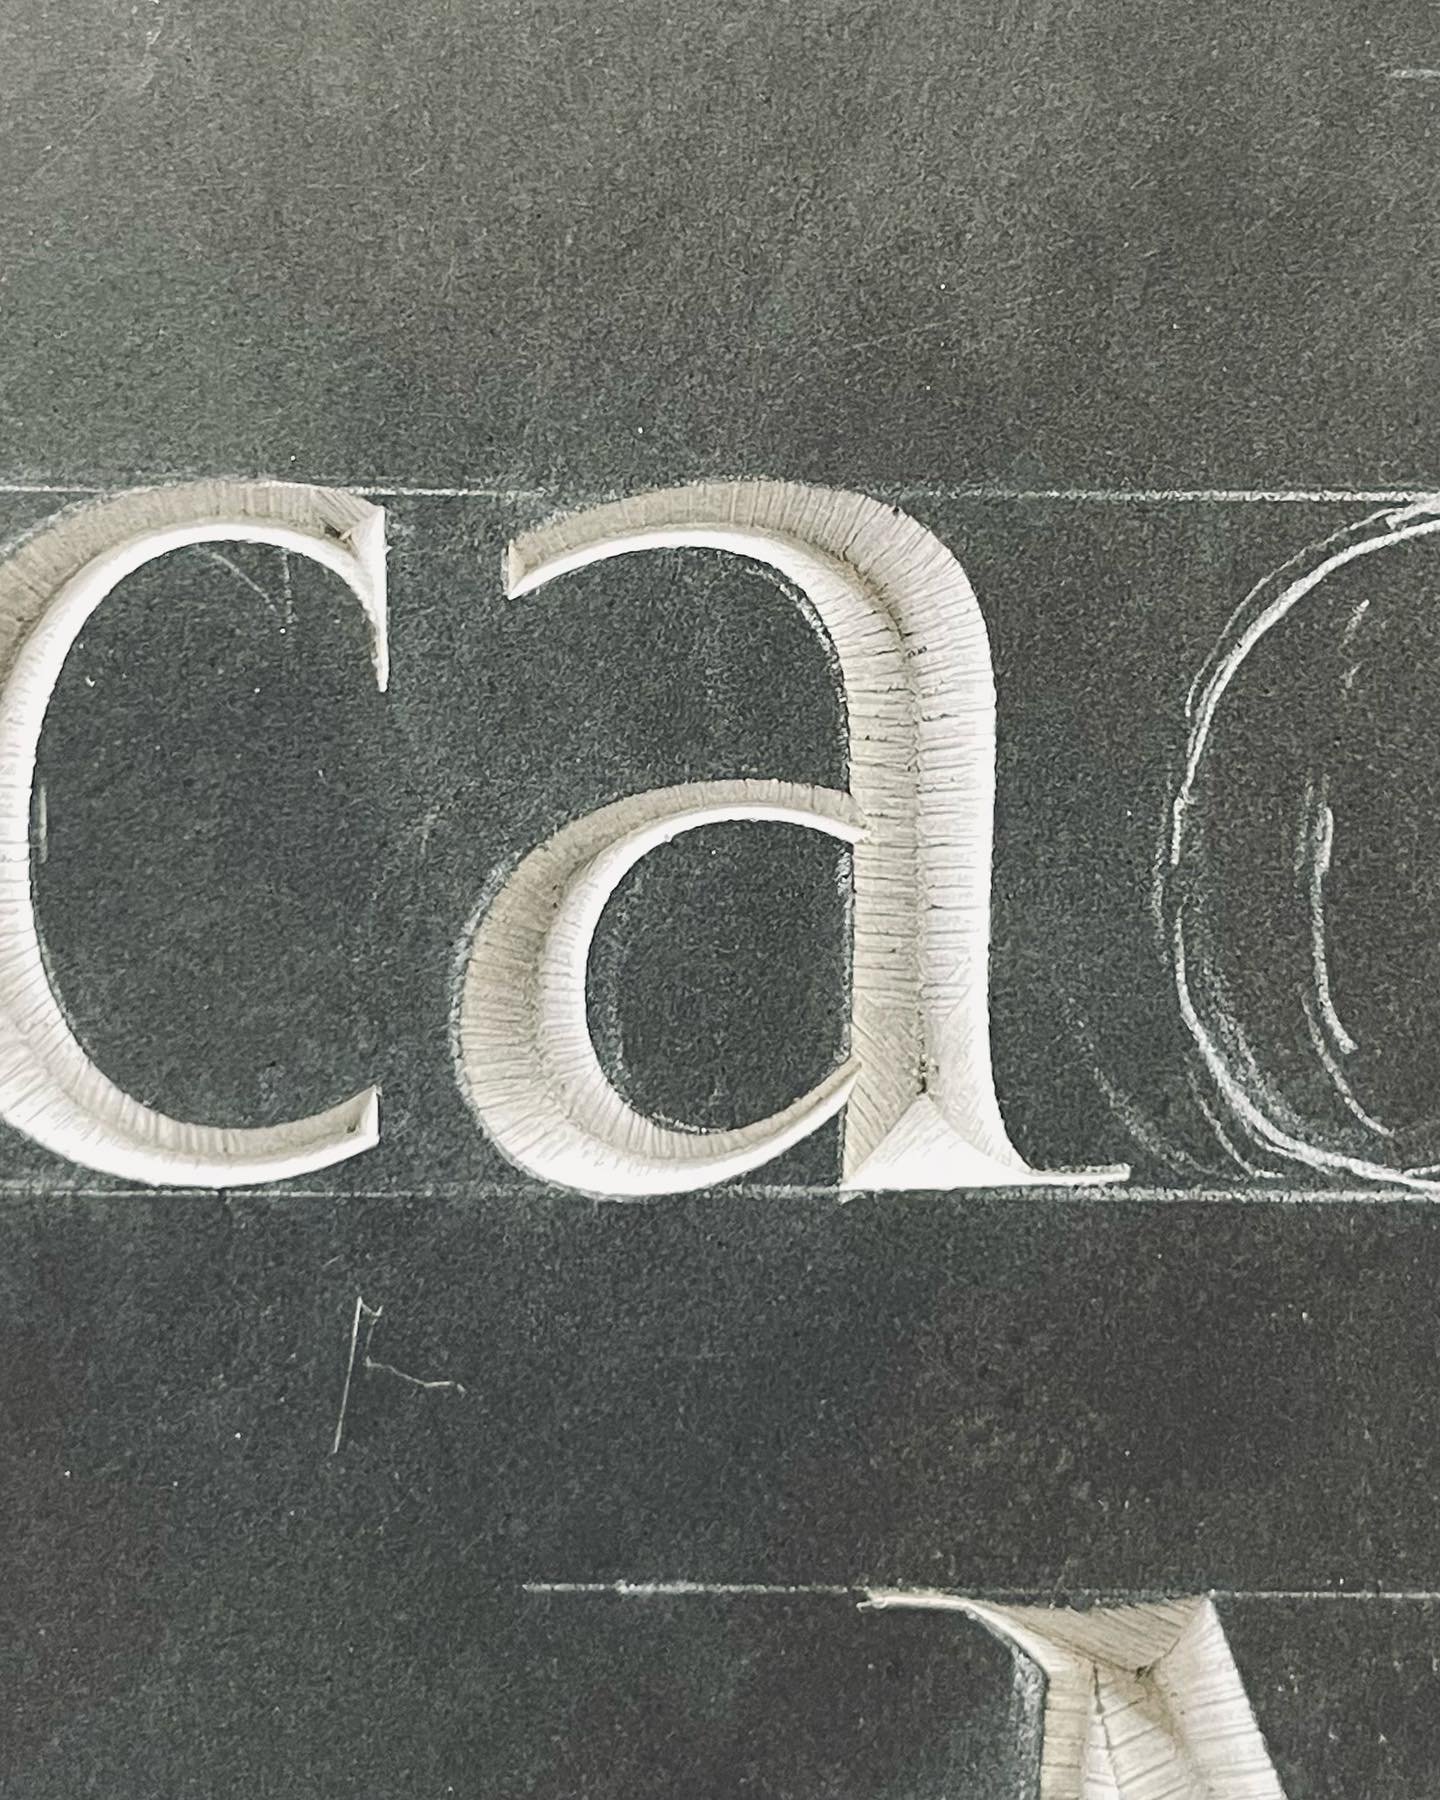 An &lsquo;a&rsquo; to start the week ✨ Swipe for Timelapse, cut by John. 
&bull;
#davidkinderlsey #davidkindersleyworkshop #cardozokindersleyworkshop #lidakindersley #lettering #lettercutting #lettercarving #stonecarving #lettercutter #welshslate #wo